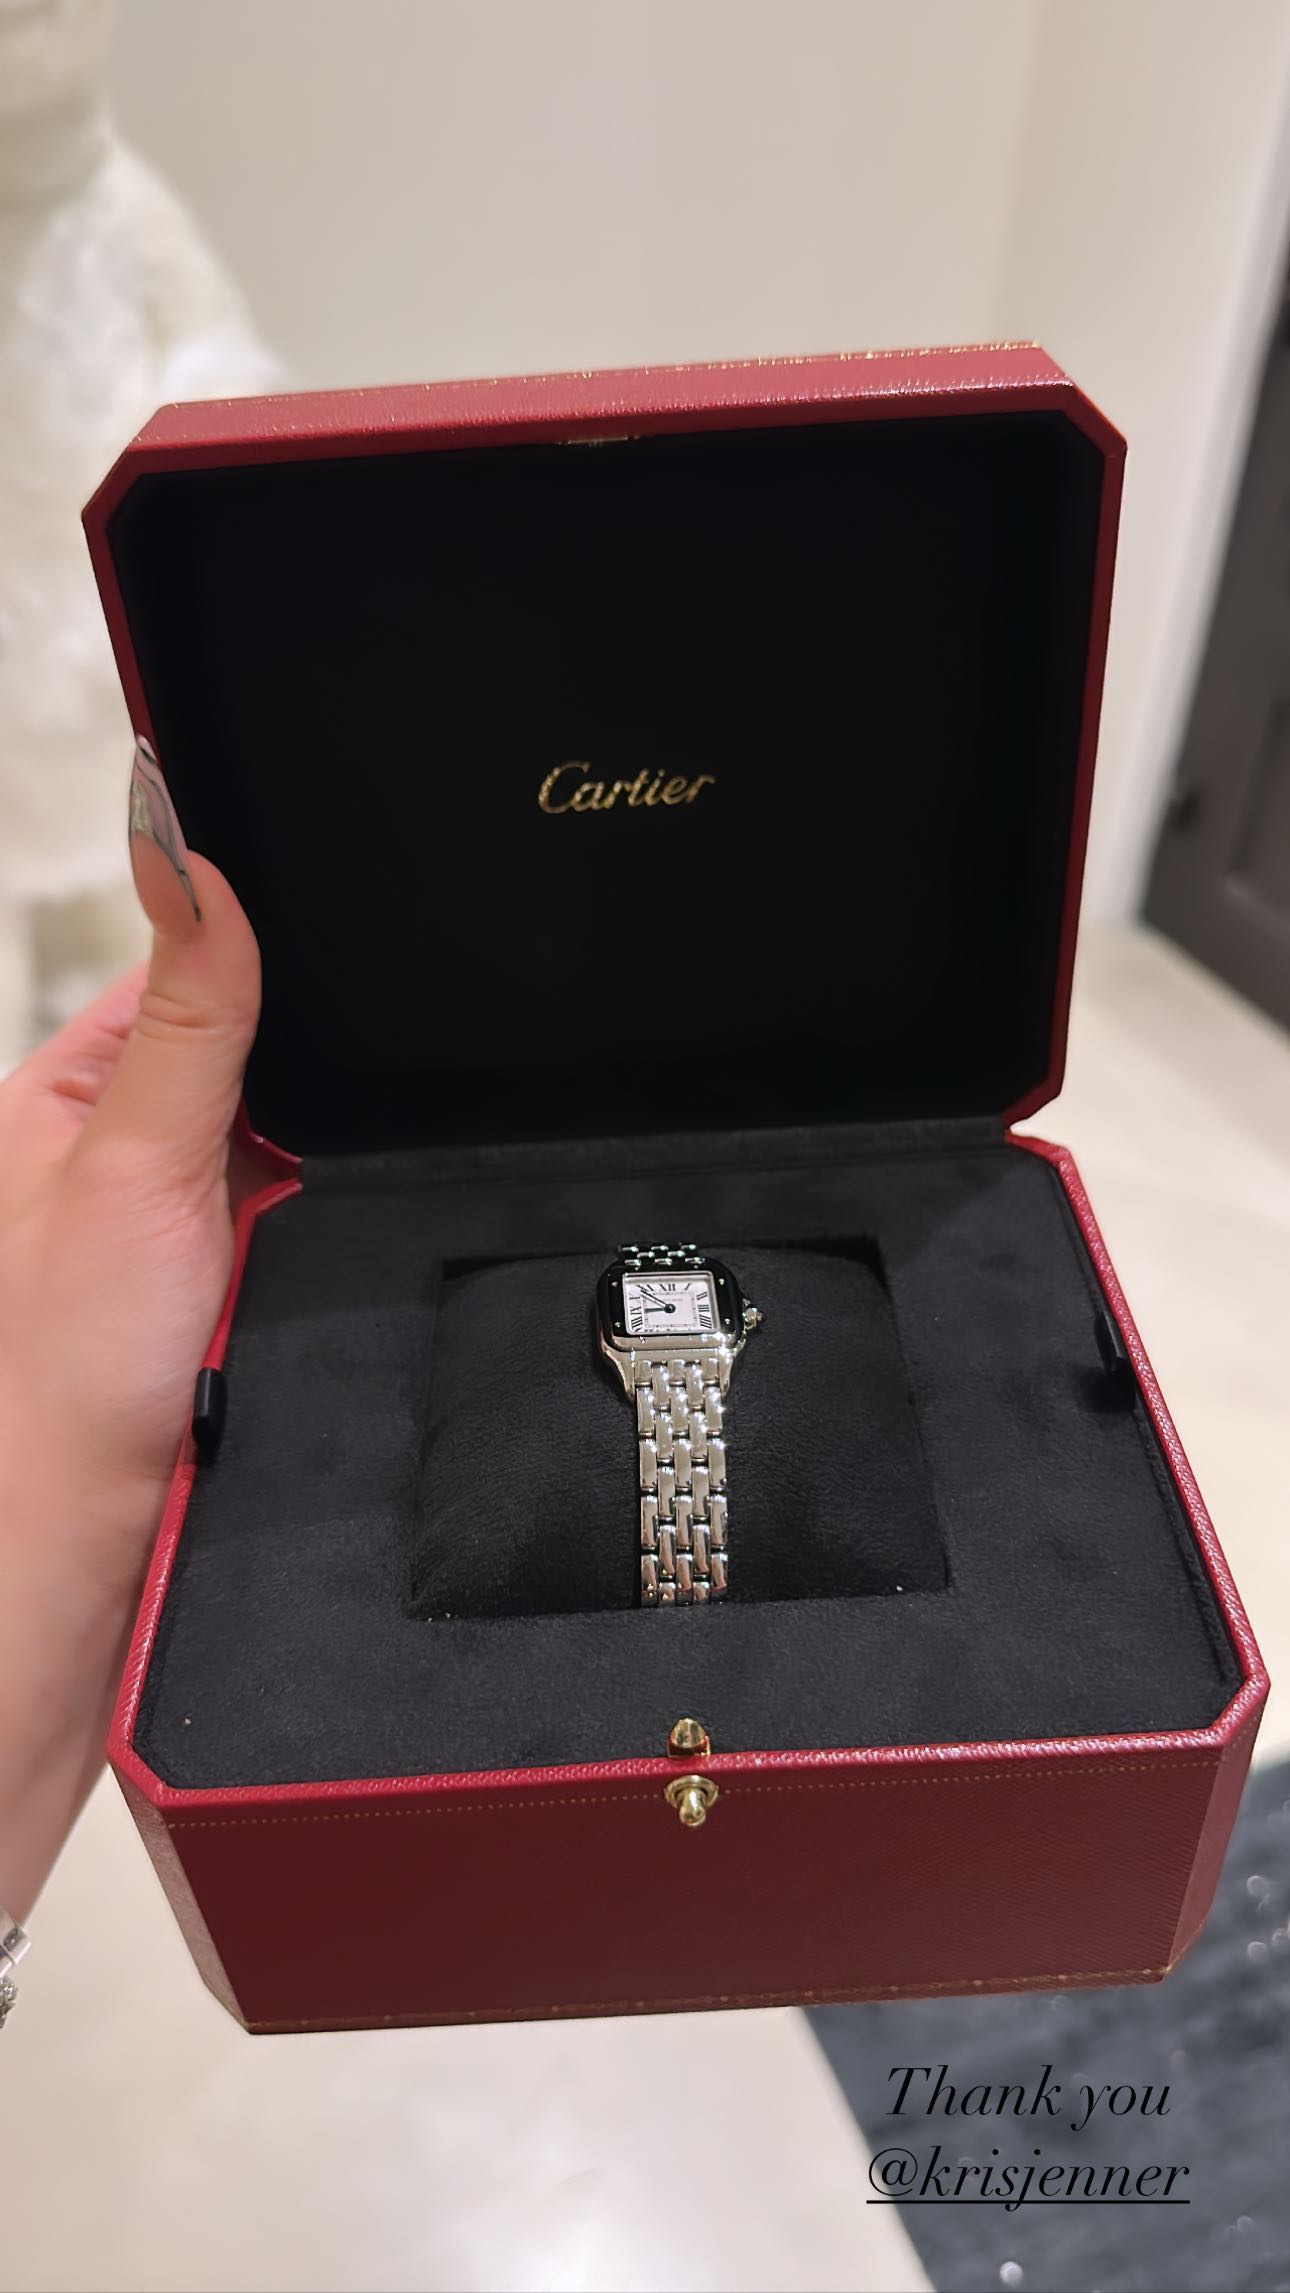 Alabama even received a Cartier watch from Kris Jenner